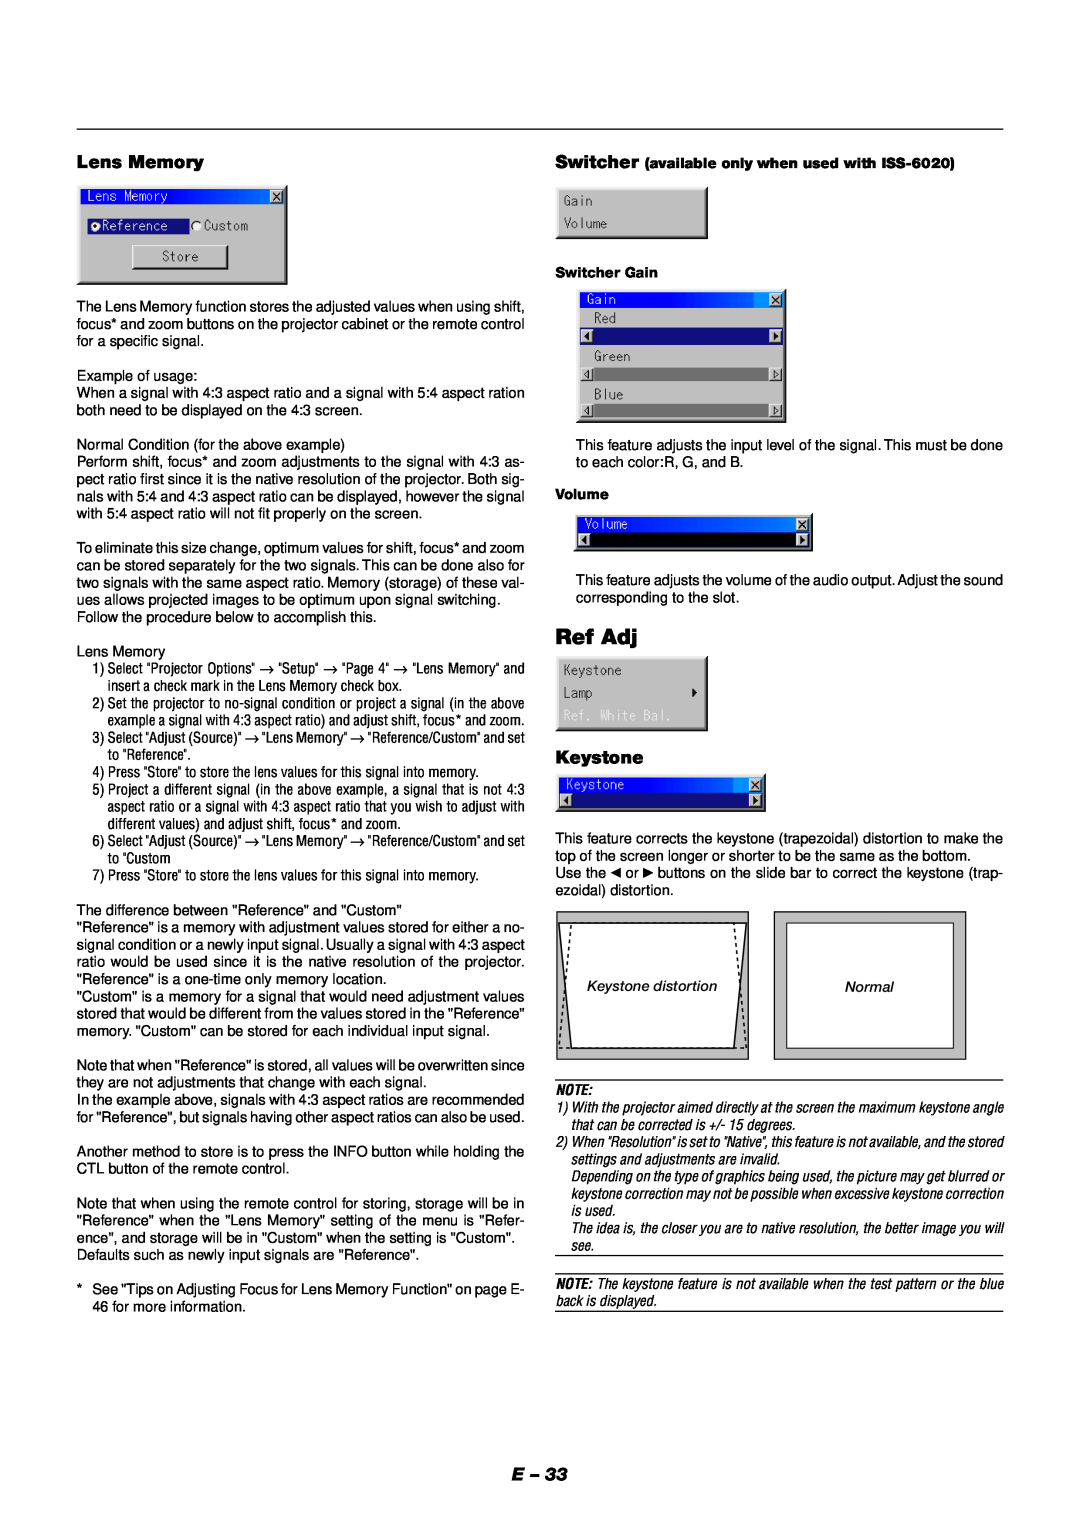 NEC XT9000 user manual Ref Adj, Lens Memory, Keystone 